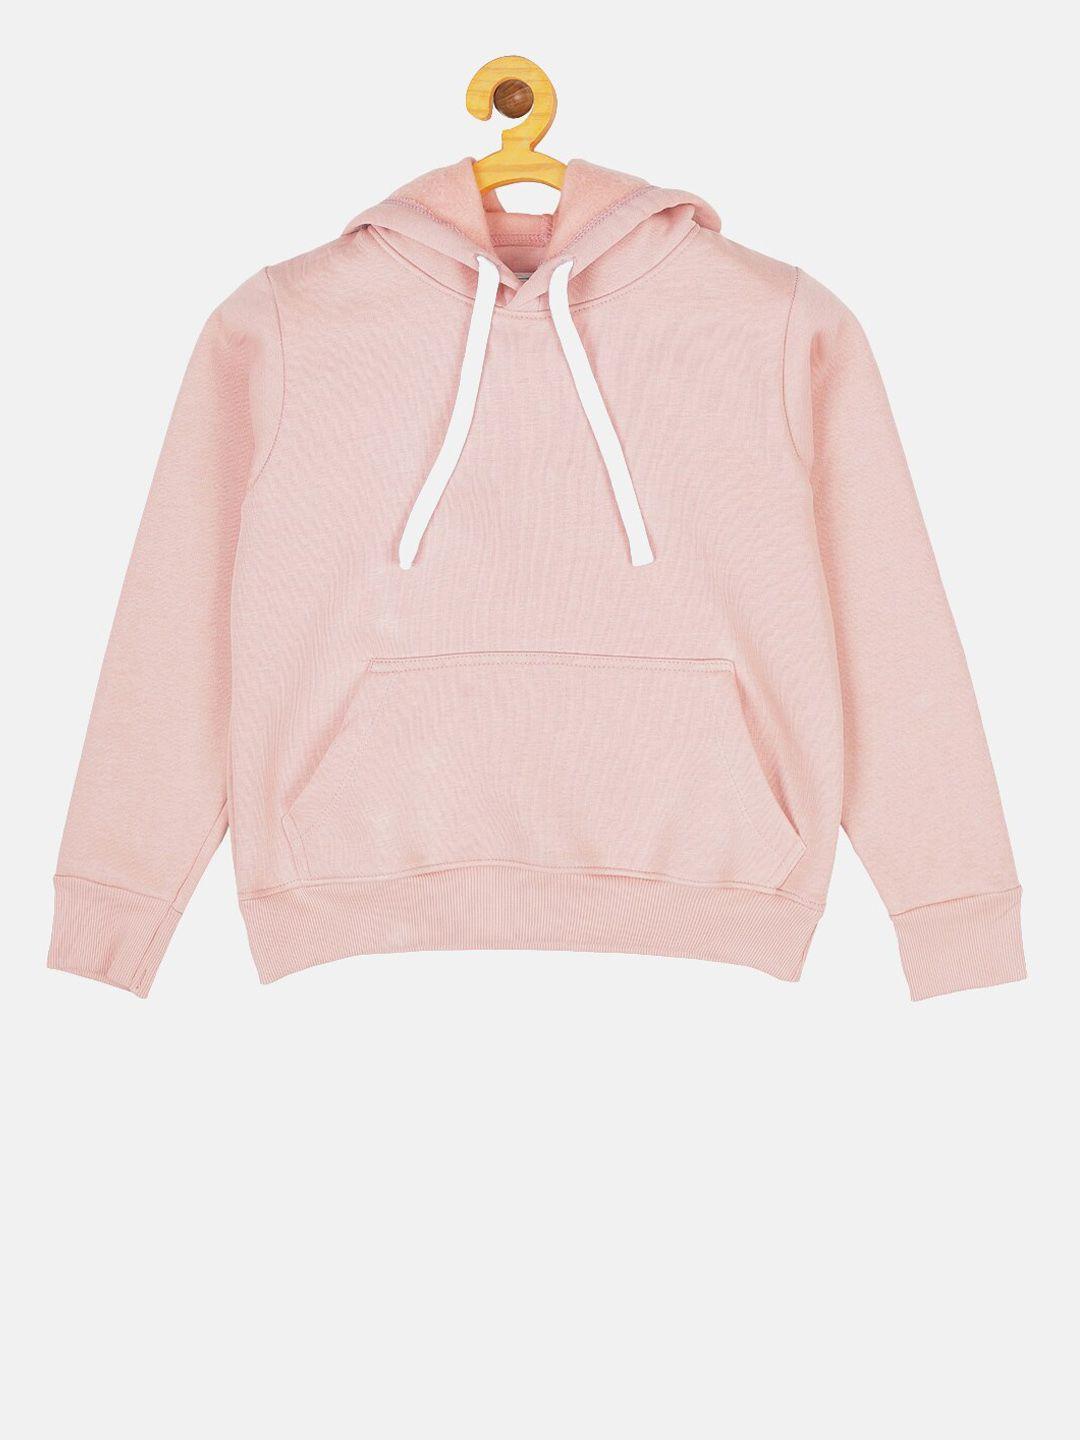 instafab kids pink solid hooded sweatshirt